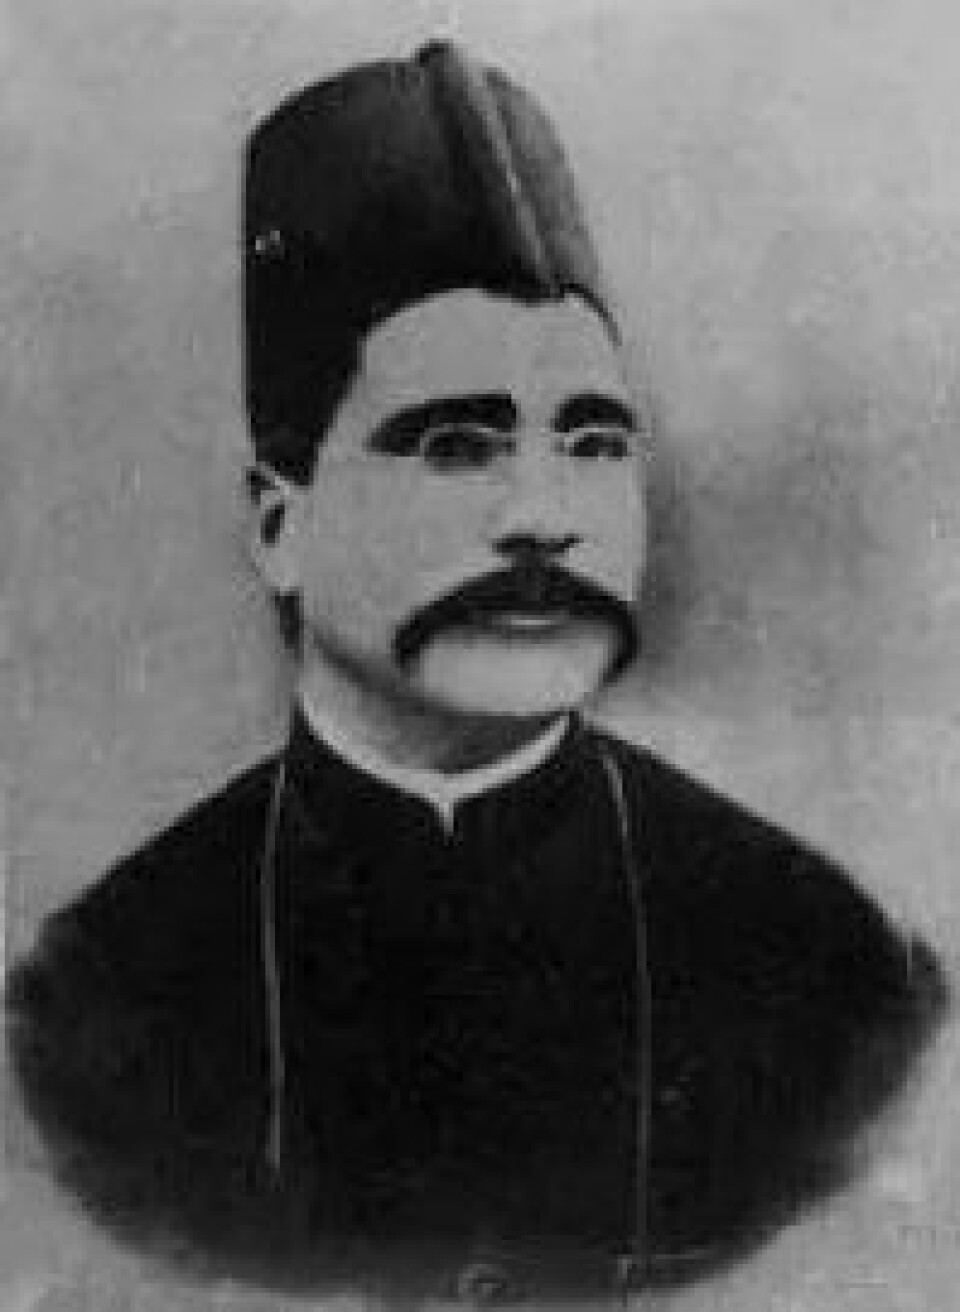 Mohammad Iqbal, fotografert i 1899. (Kilde: Wikimedia Commons)